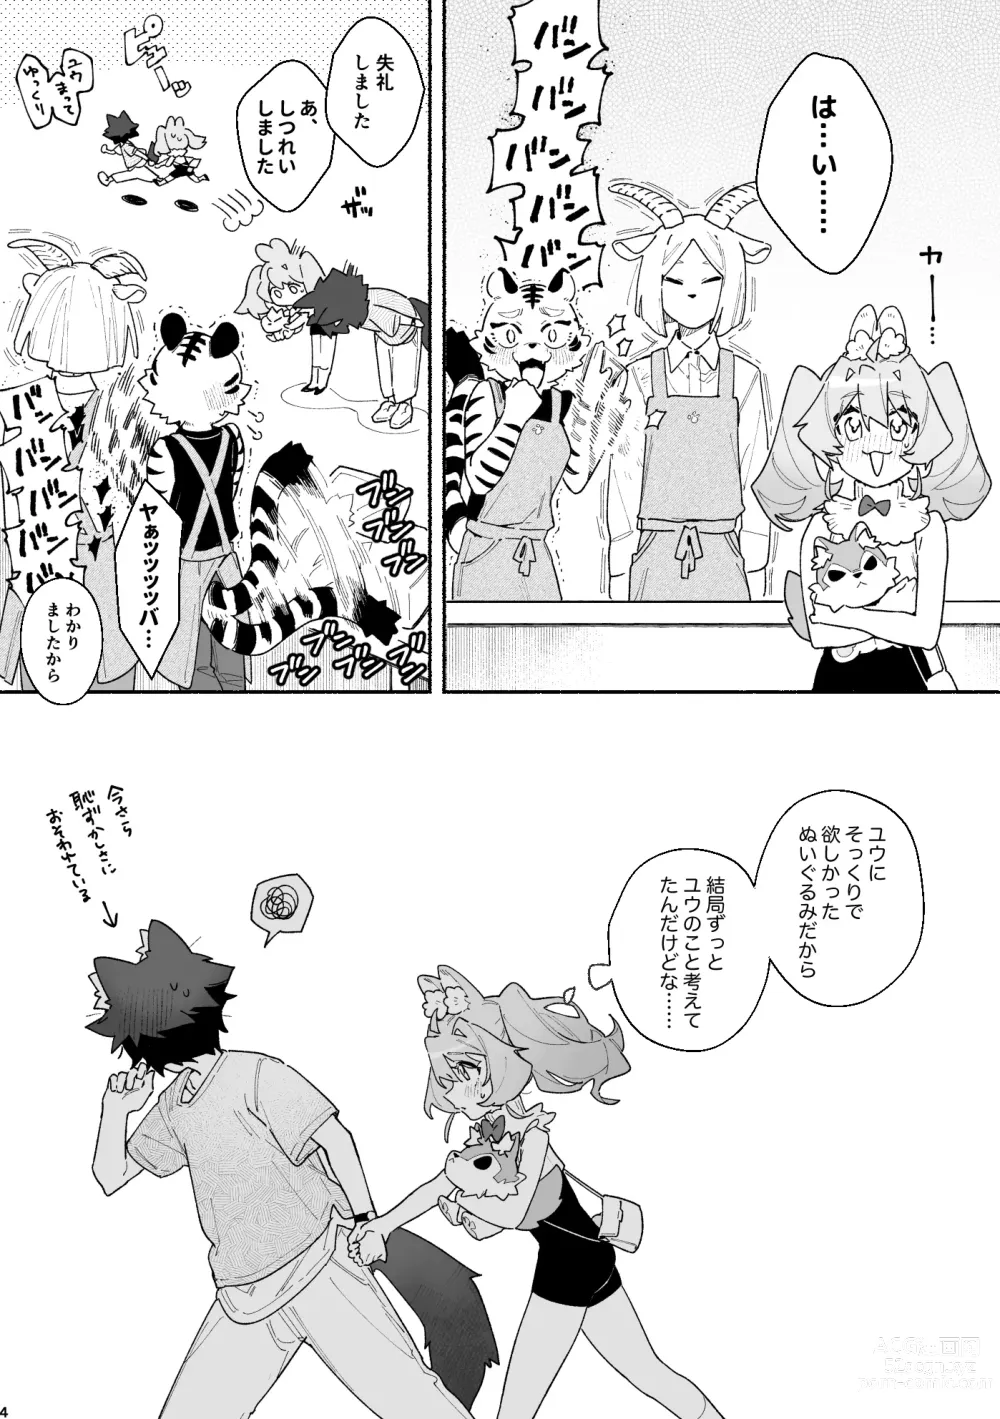 Page 47 of doujinshi ♂ ga Uke. Usagi-chan x Ookami-kun